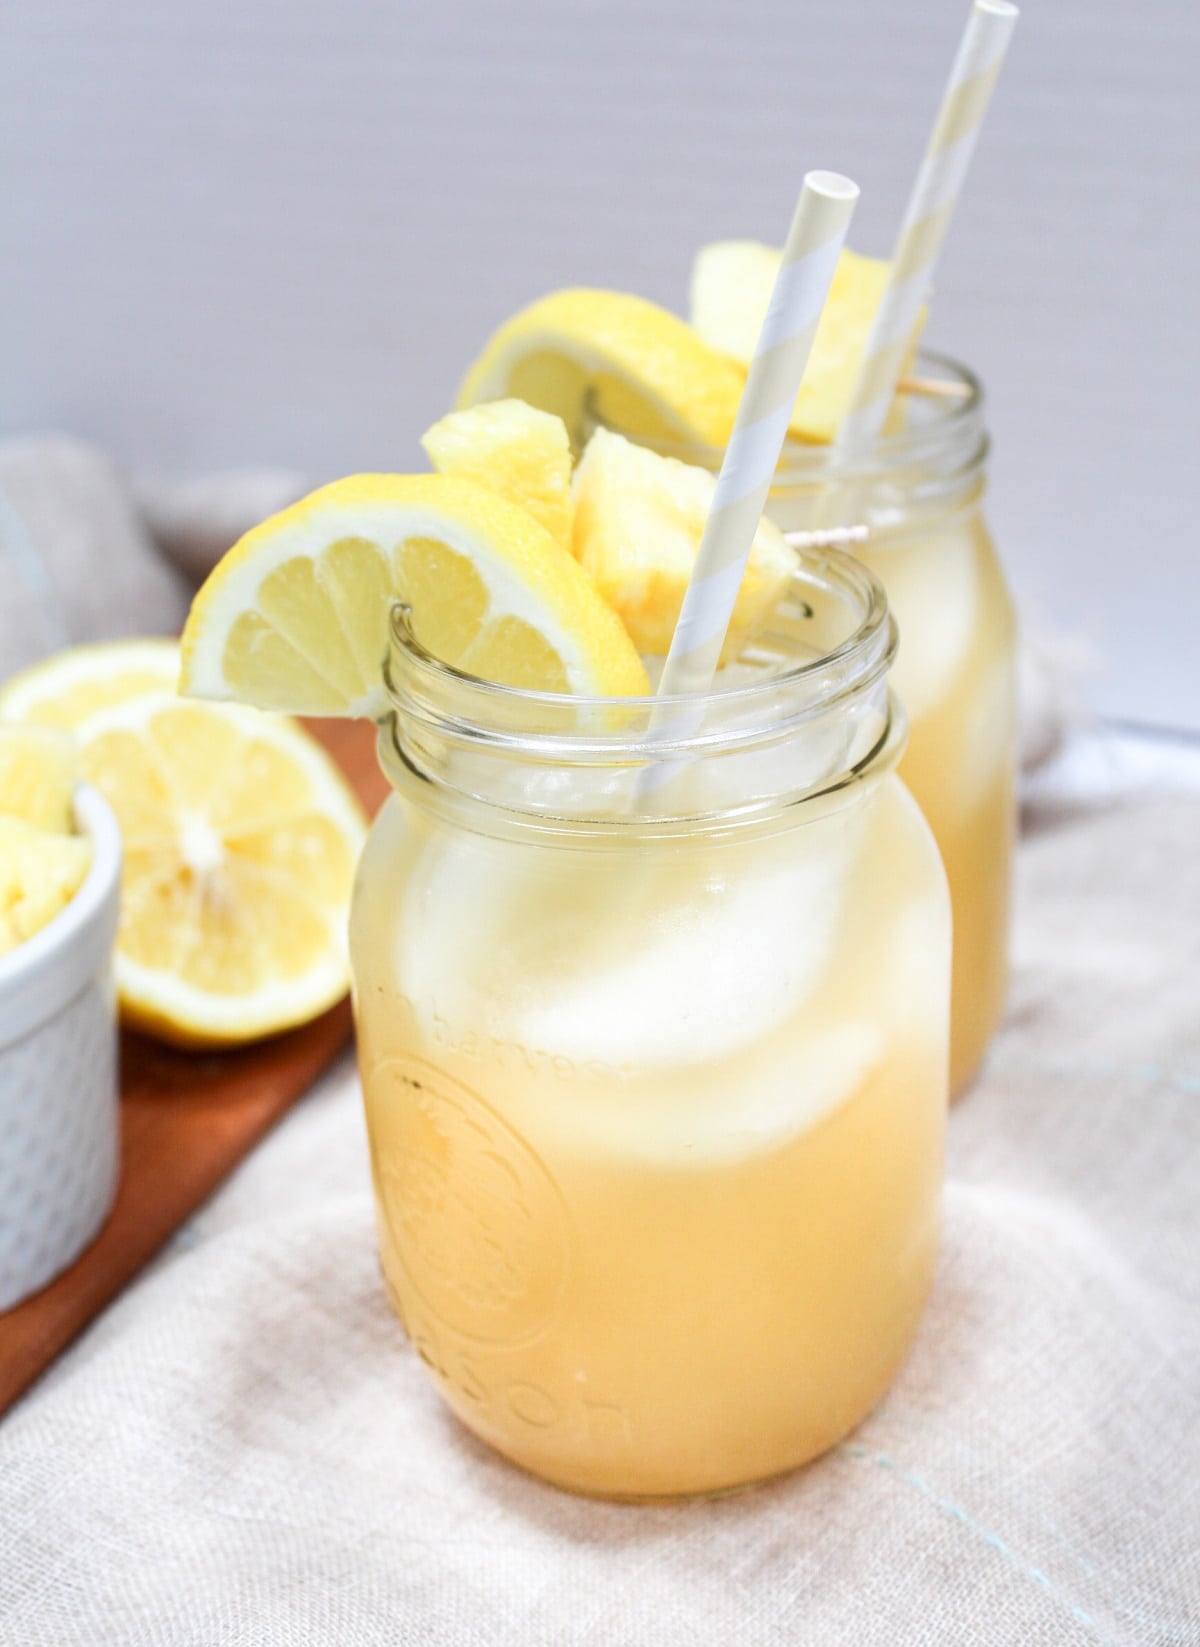 pineapple bourbon lemonade in glass with pineapple and lemon garnish